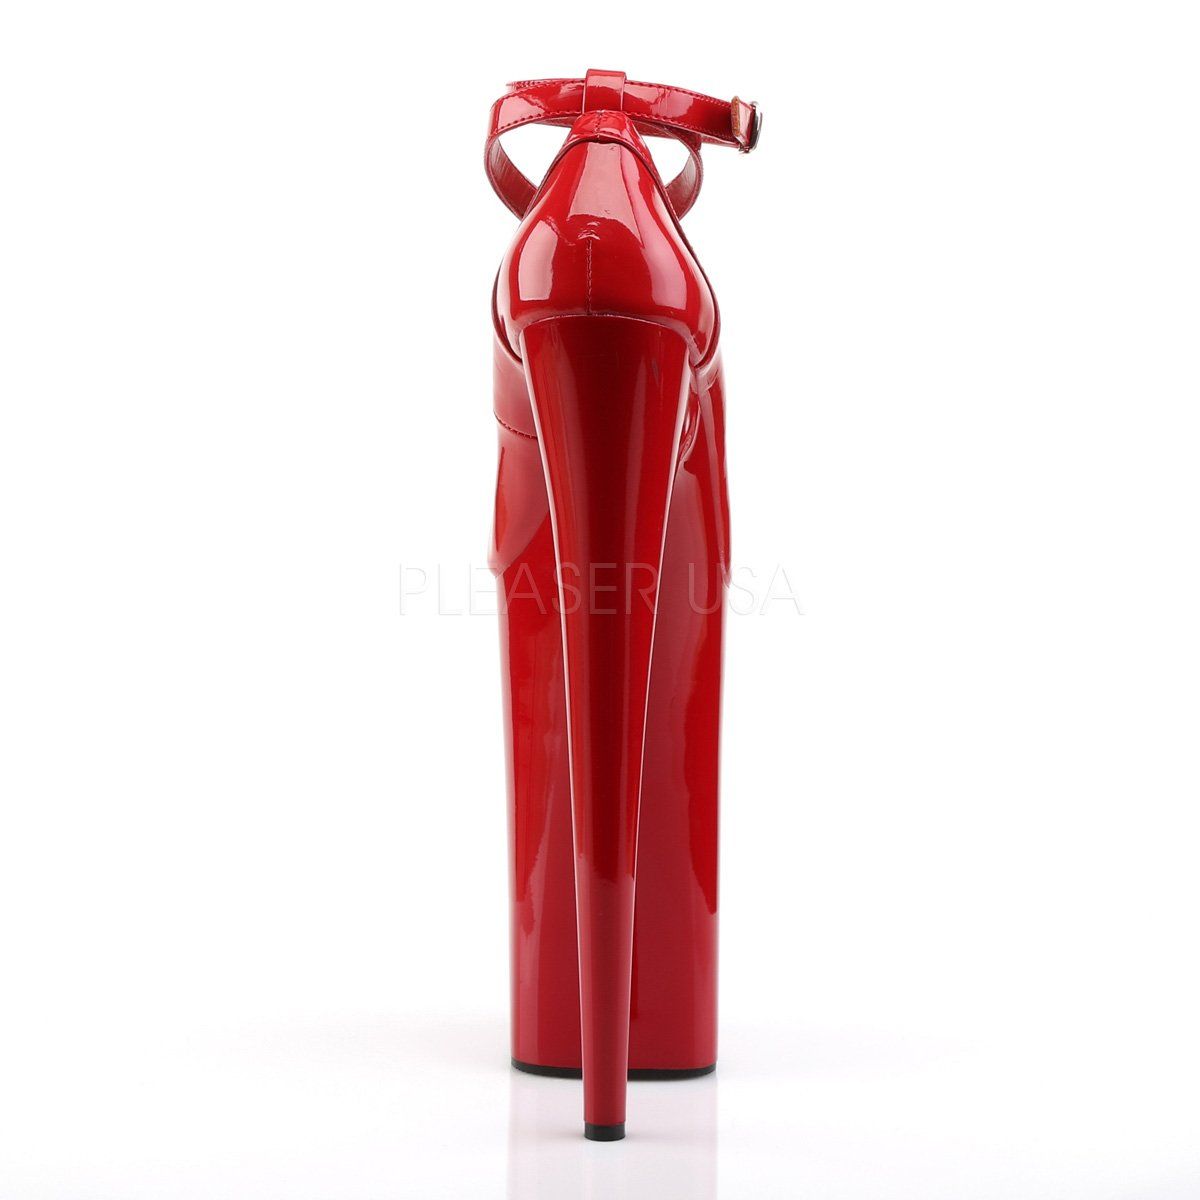 BEYOND-087 Red Pump Pleaser